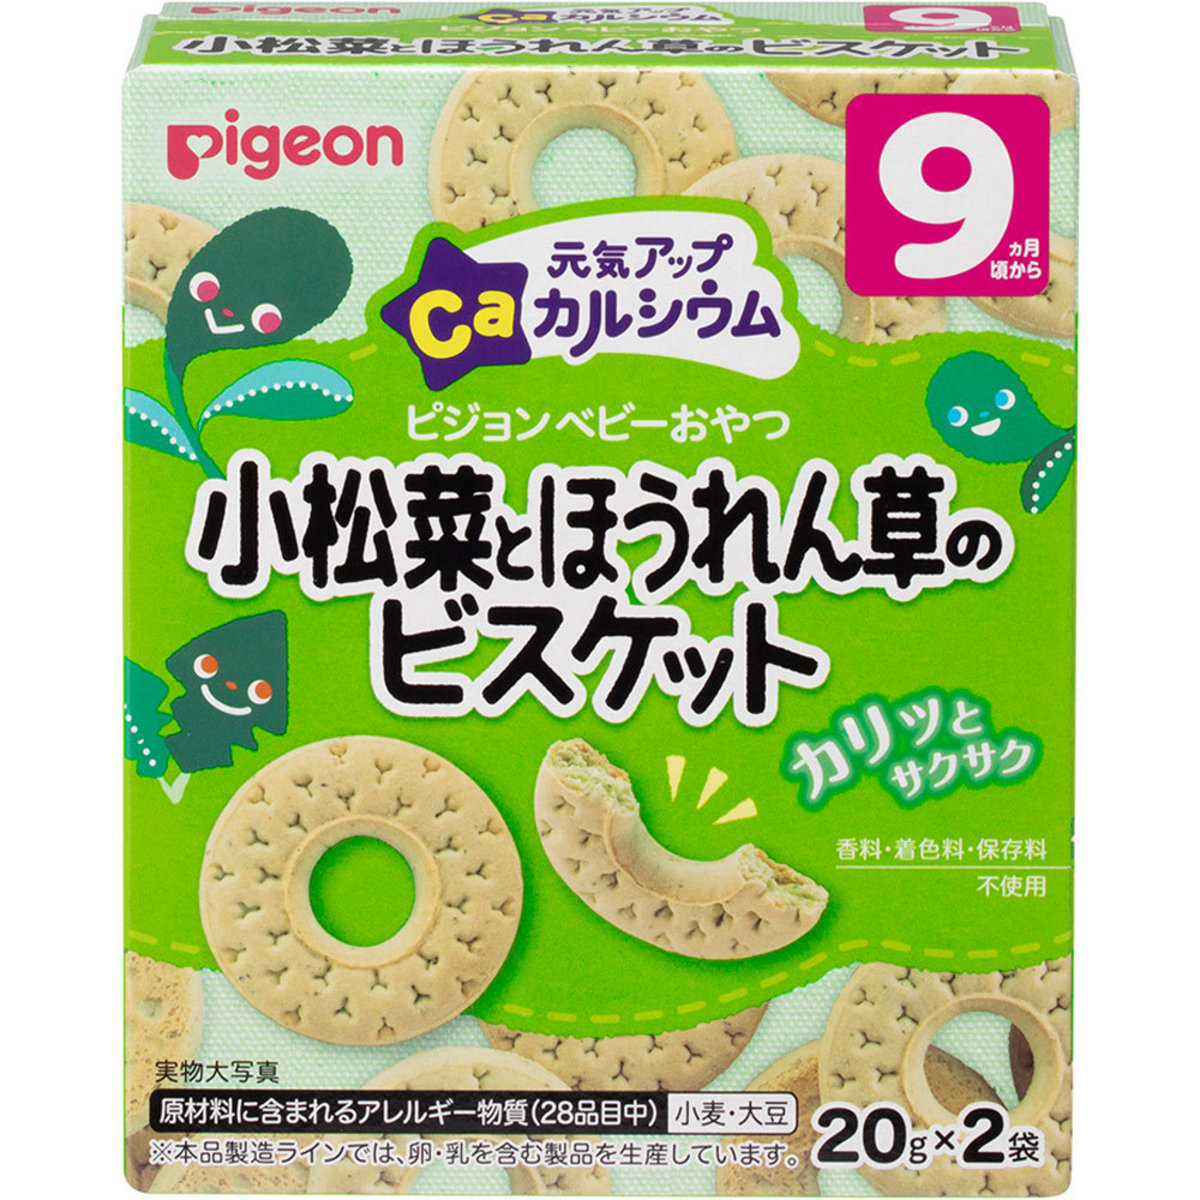 Pigeon 高鈣小松菜餅 平行進口貨品 Hktvmall 香港領先網購平台